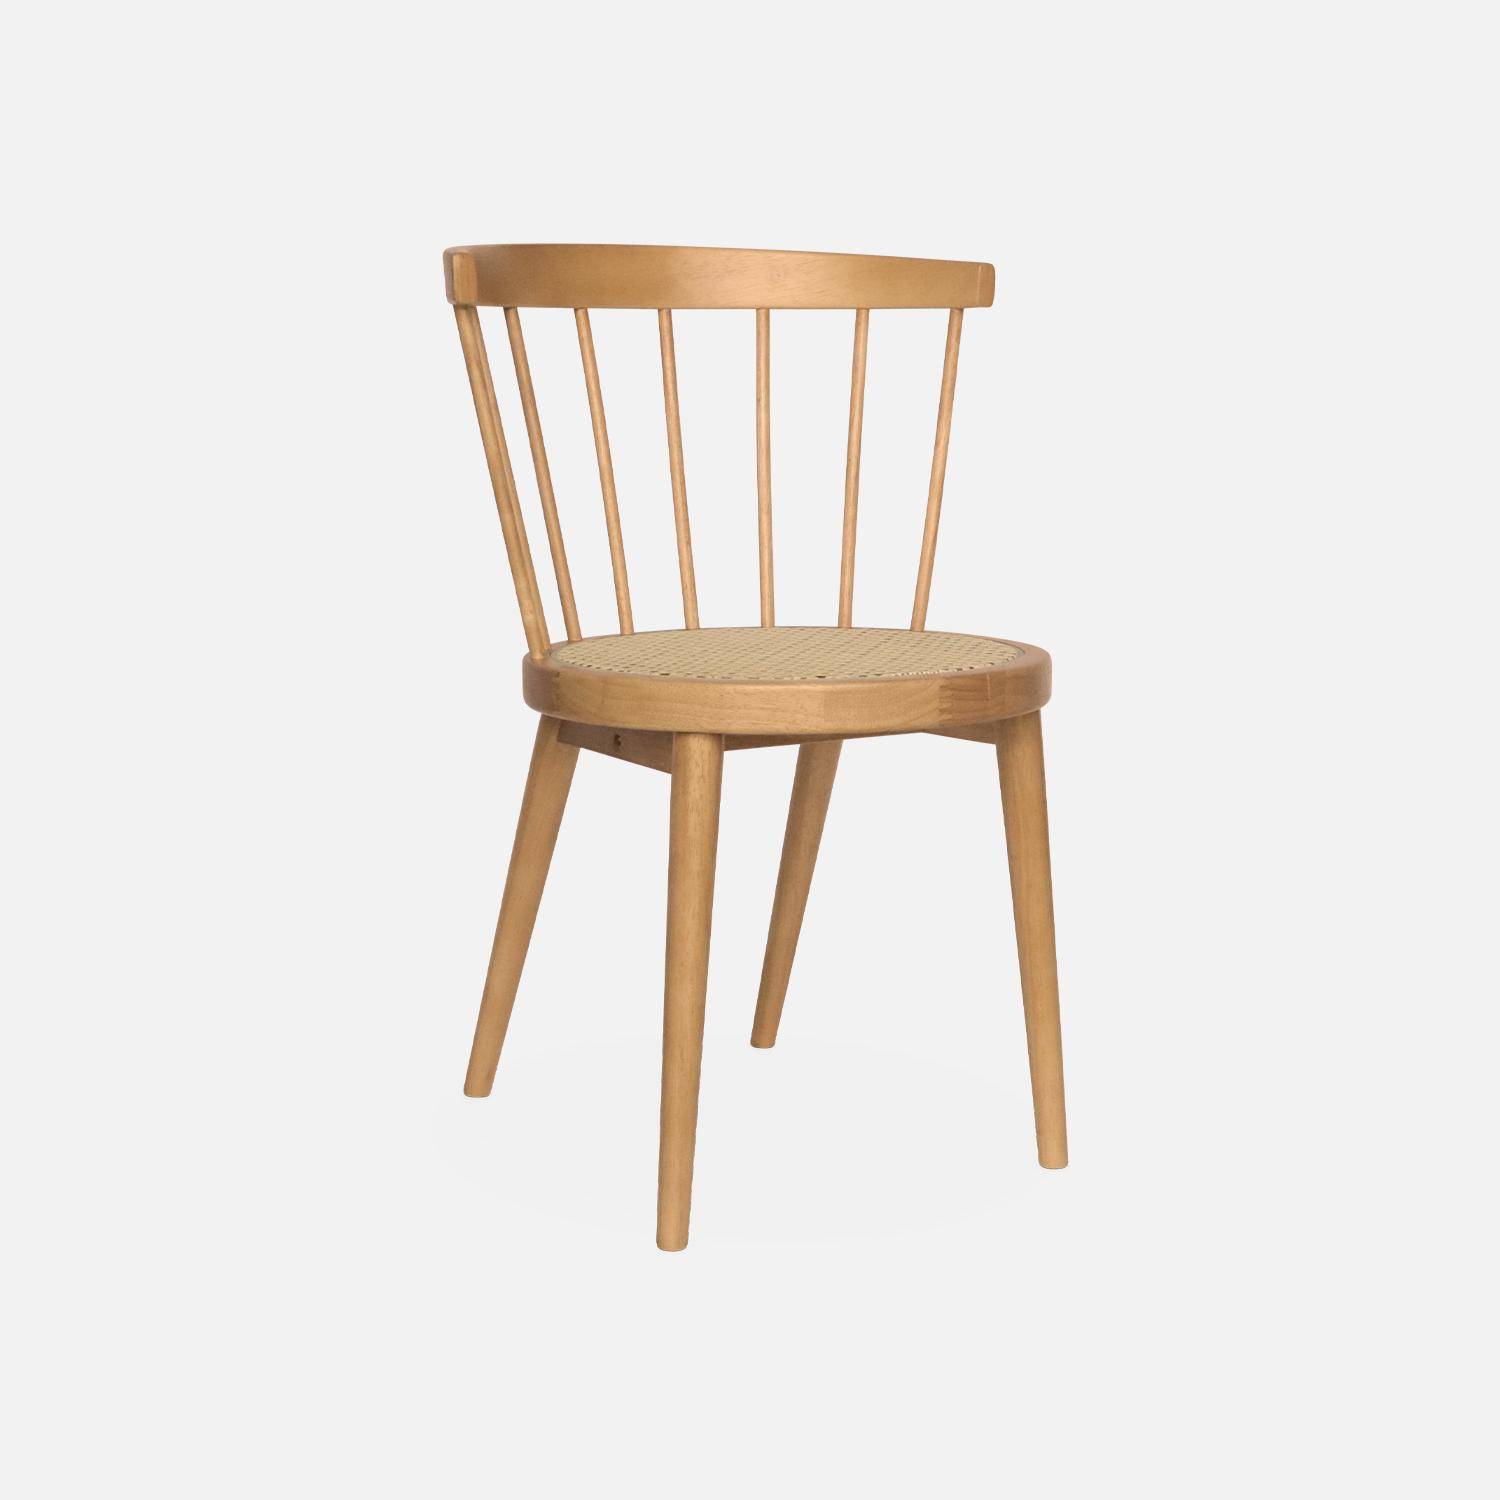 Pair of  Wood and Cane Chairs, Bohemian Spirit, Natural, L53 x W53.5 x H 6 cm,sweeek,Photo5